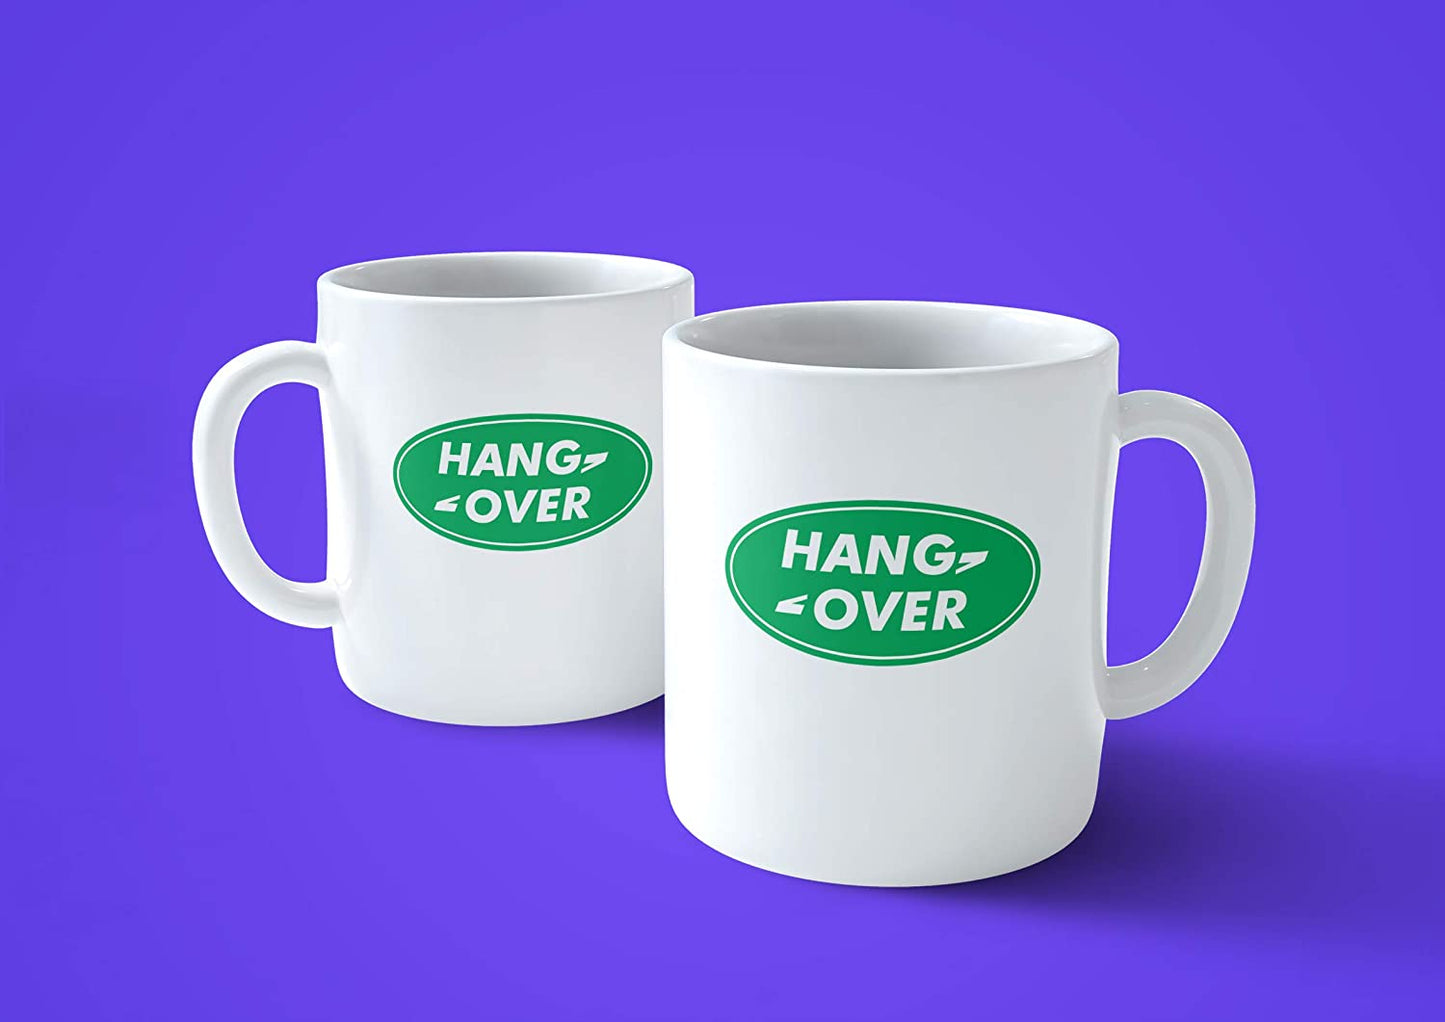 Lavender Tazza Hangover - Mug Ideale per Il Day After - Choose Ur Color Cuc shop